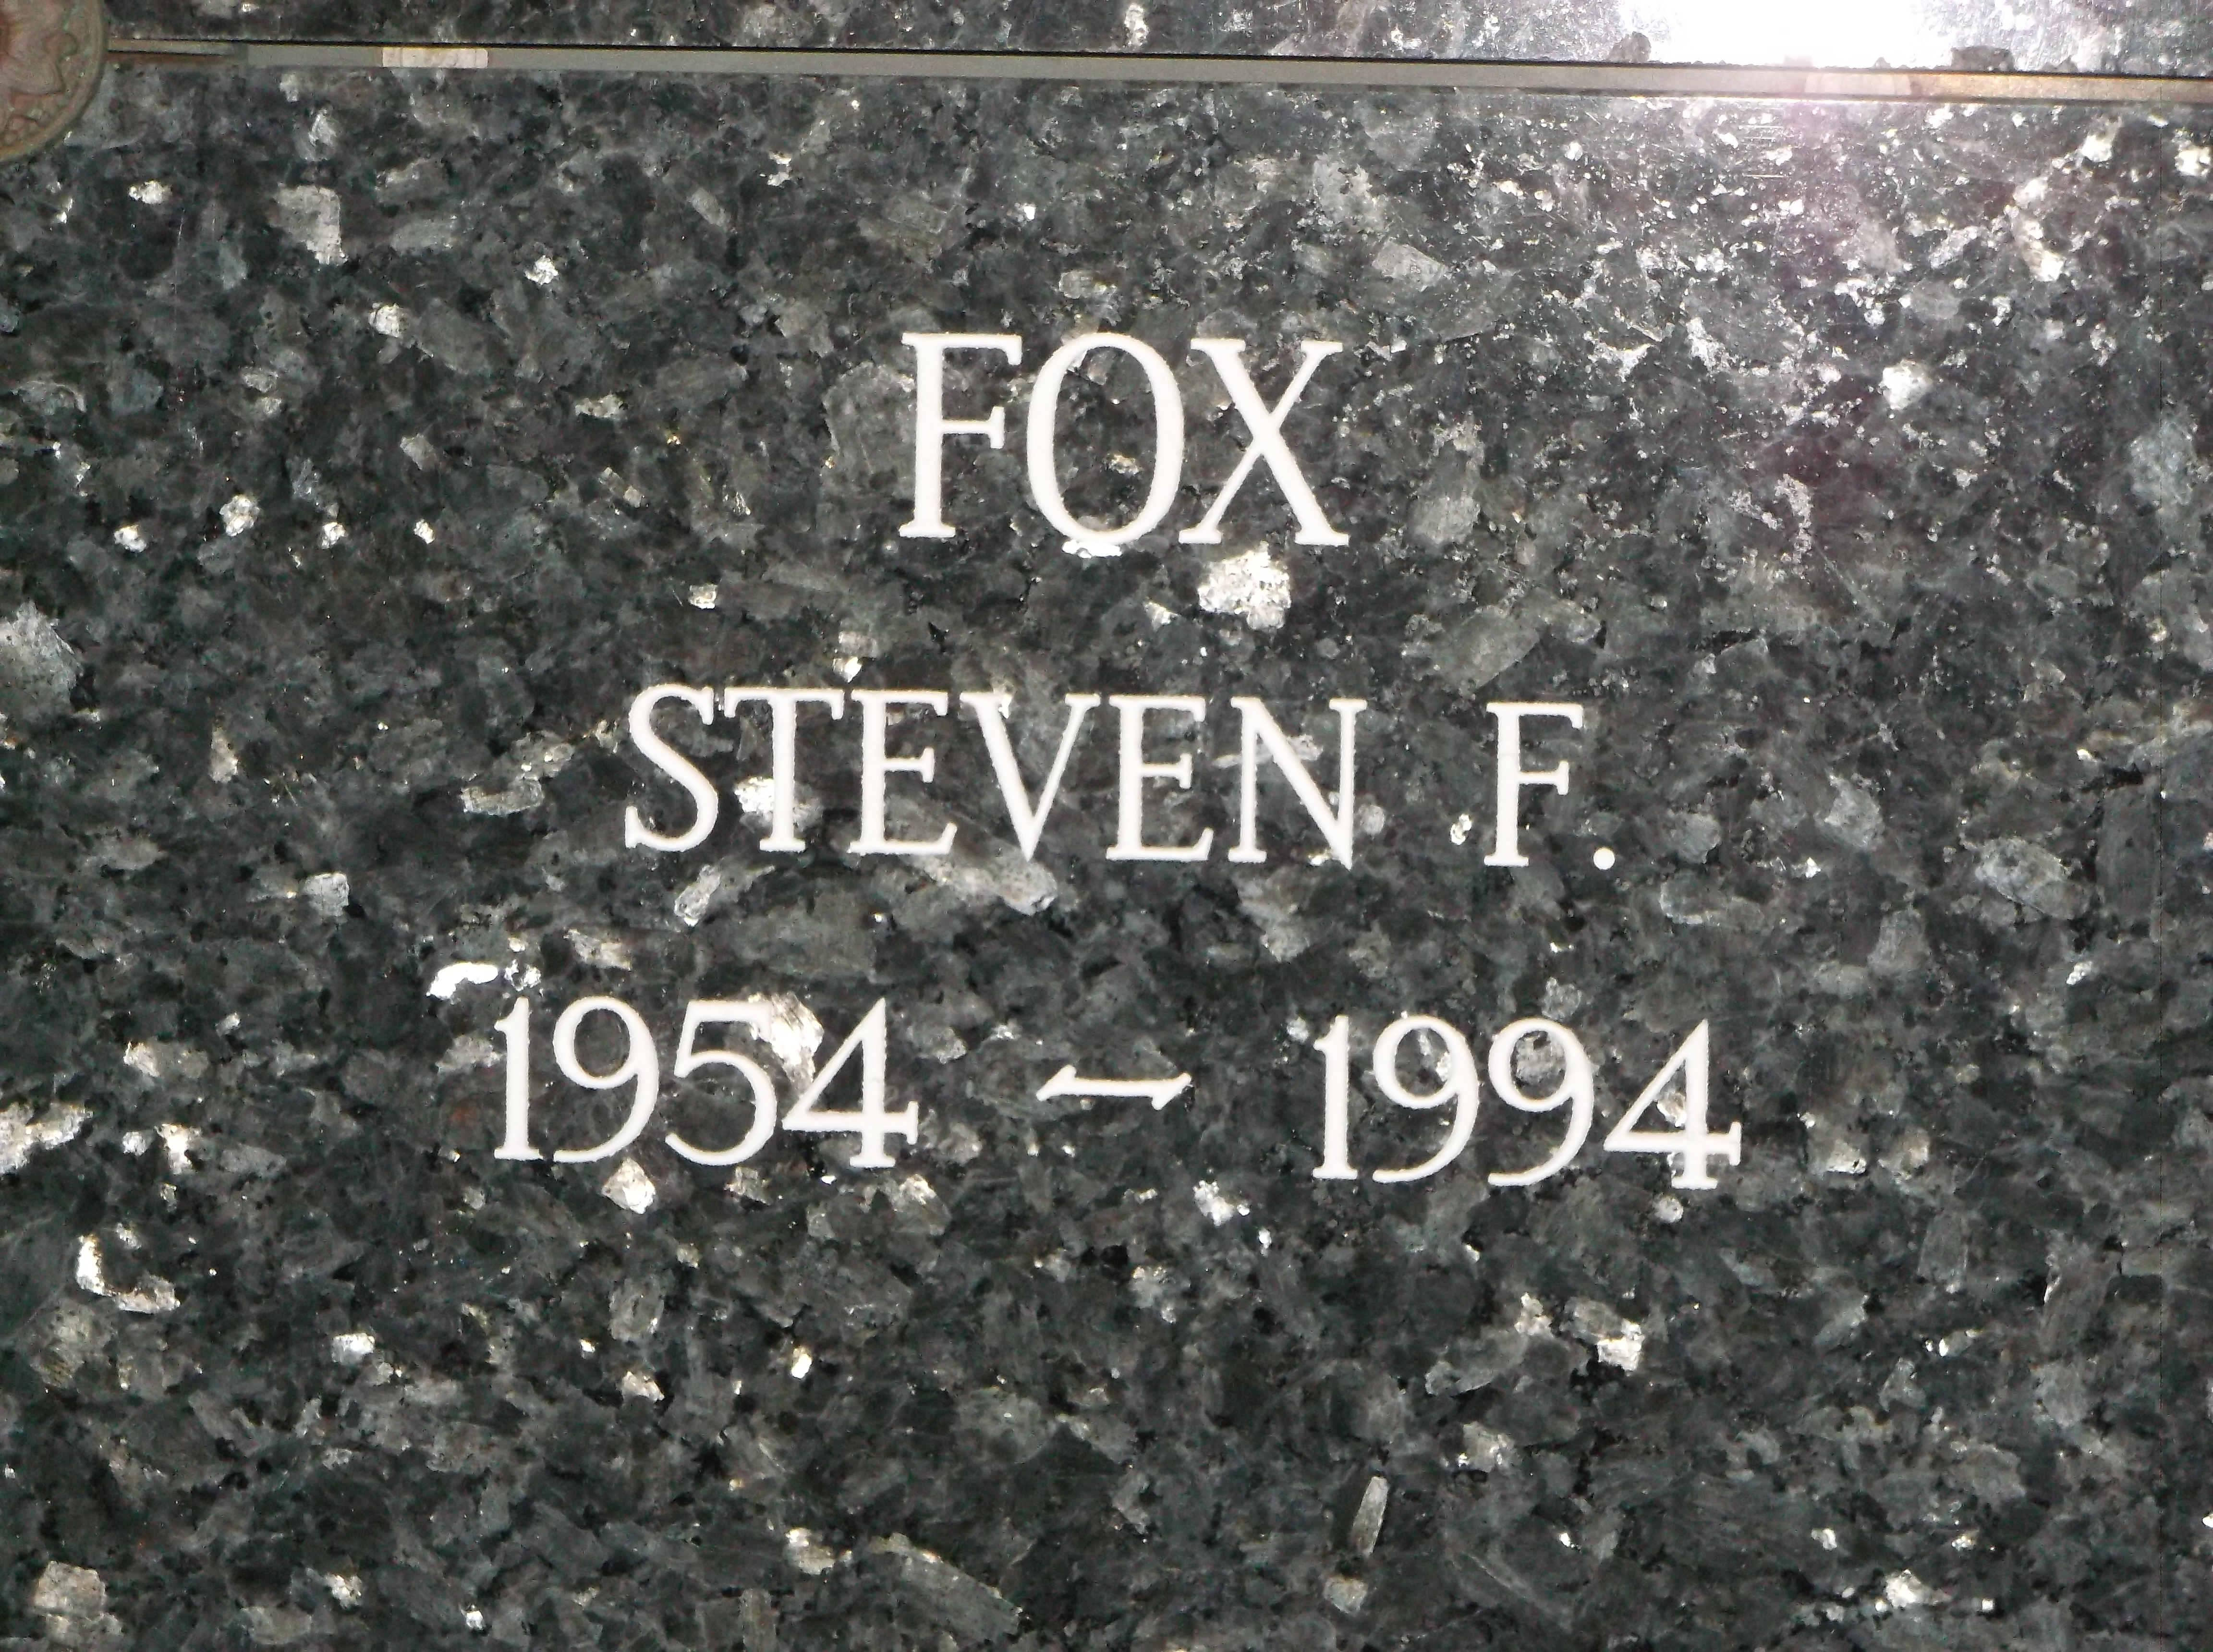 Steven F Fox